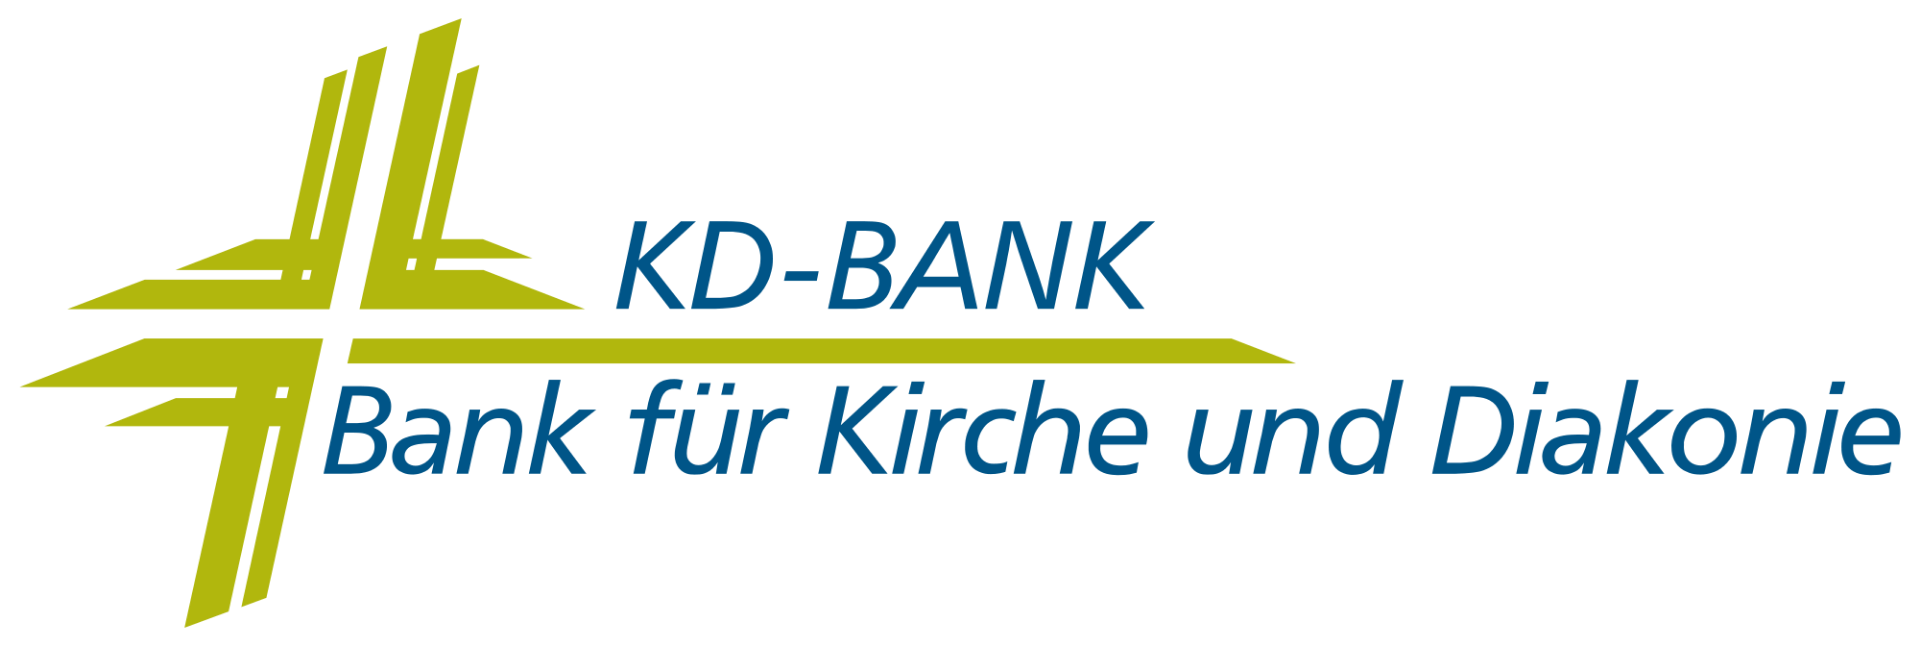 https://www.kd-bank.de/privatkunden/girokonto.html